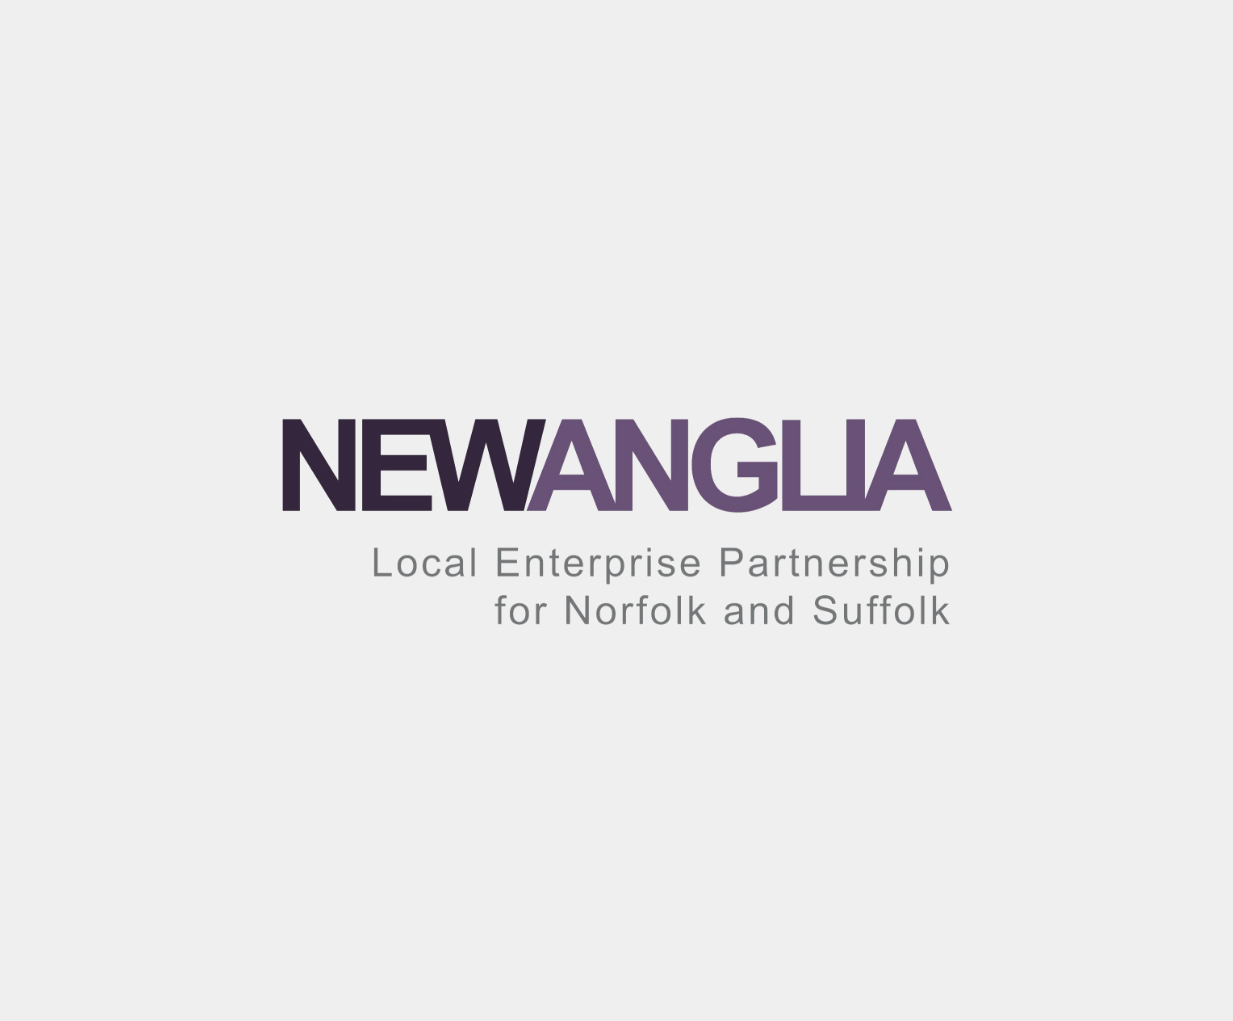 The New Anglia Local Enterprise Partnership